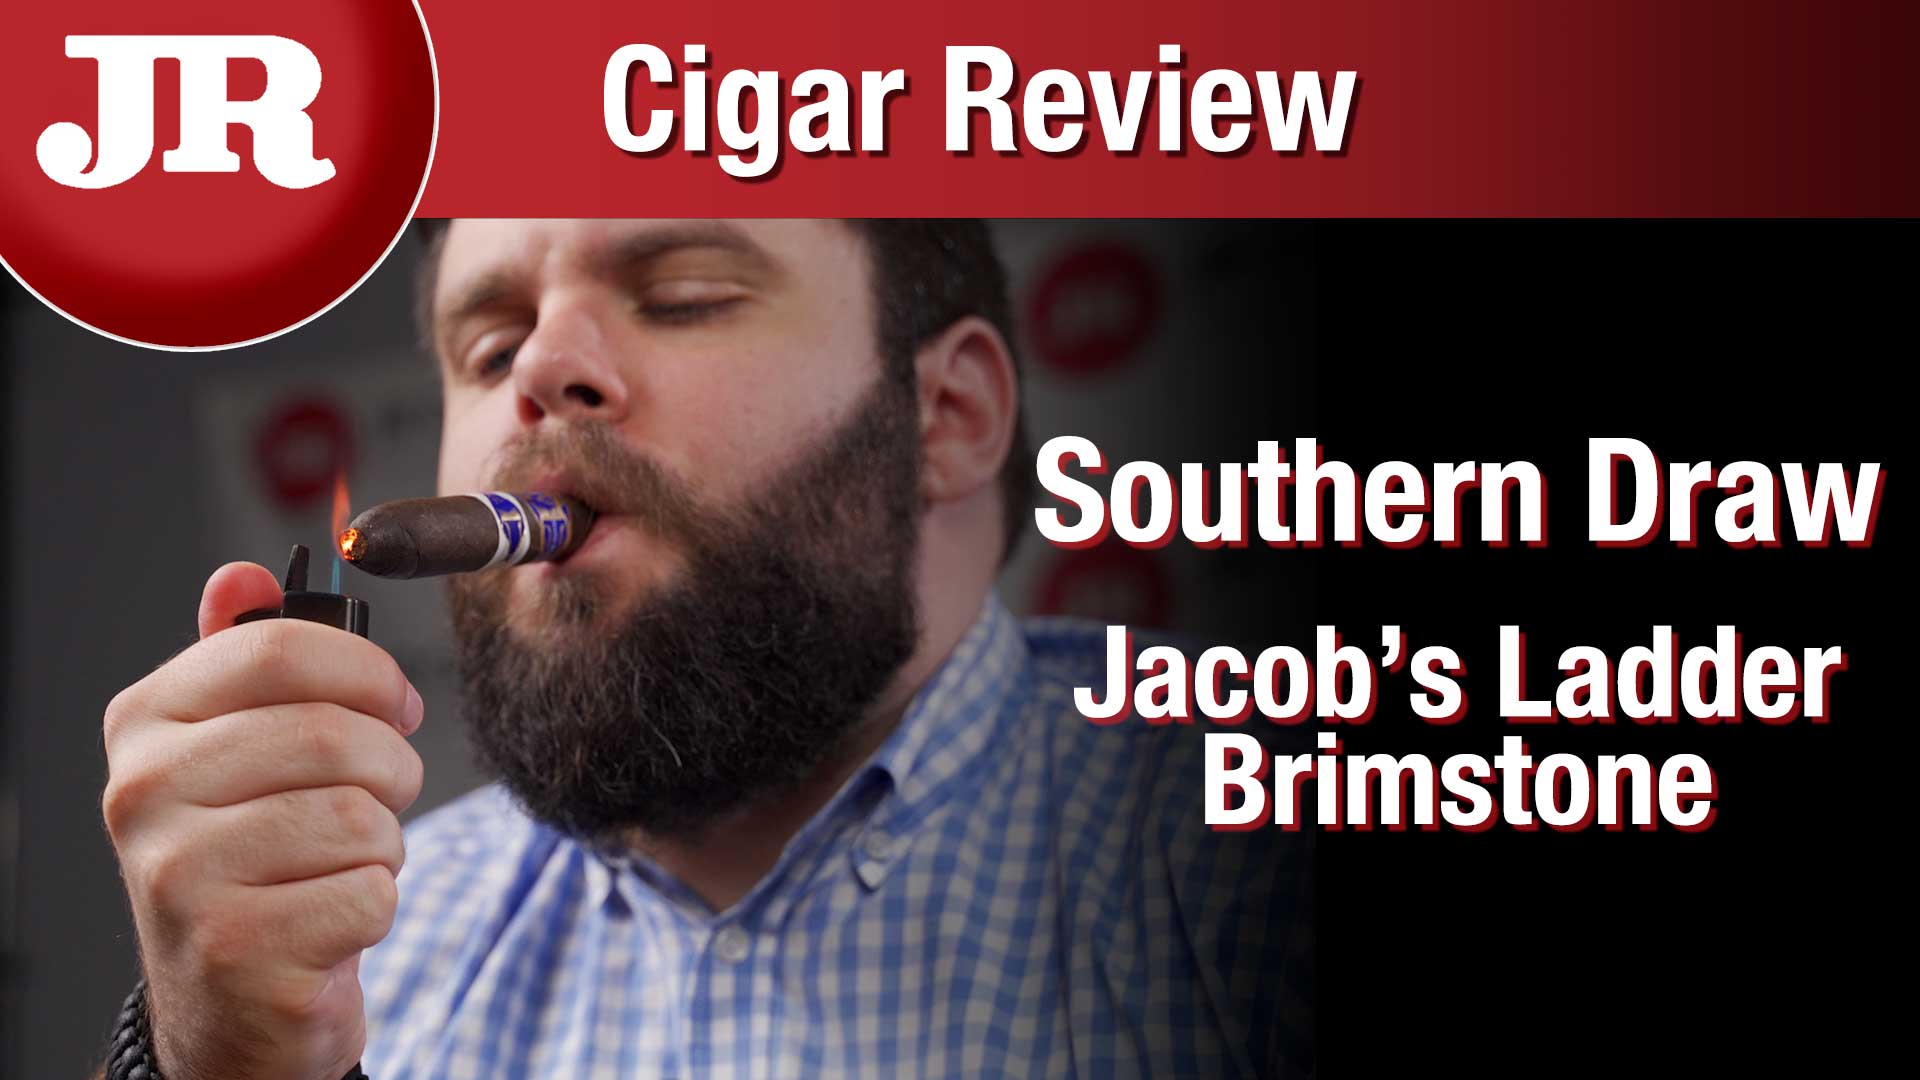 Southern Draw Jacob's Ladder Brimstone Cigar Review JR Blending Room